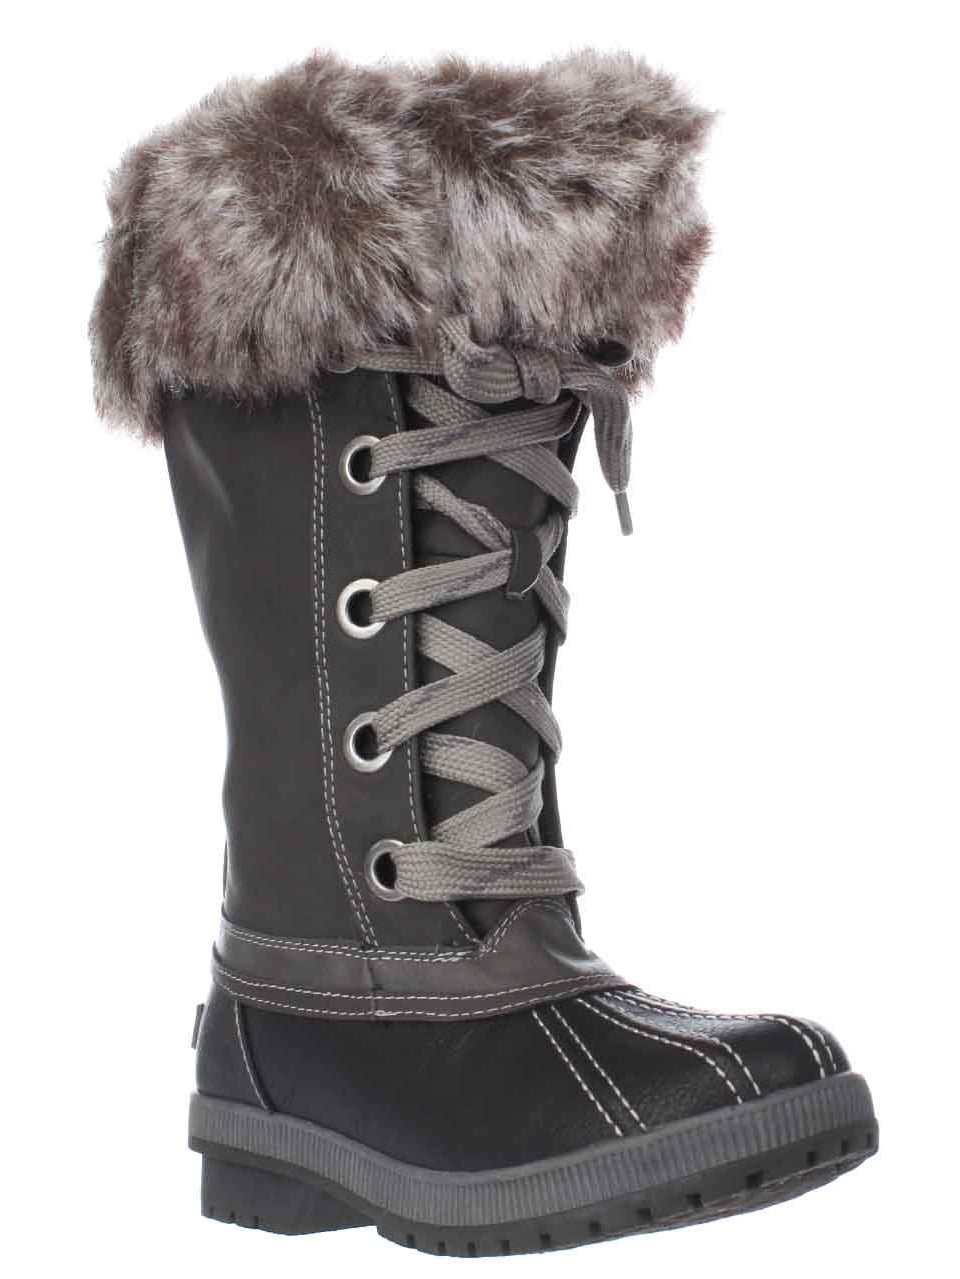 London Fog Melton 2 Women's Black Grey Waterproof Comfort Snow Boots US 9M